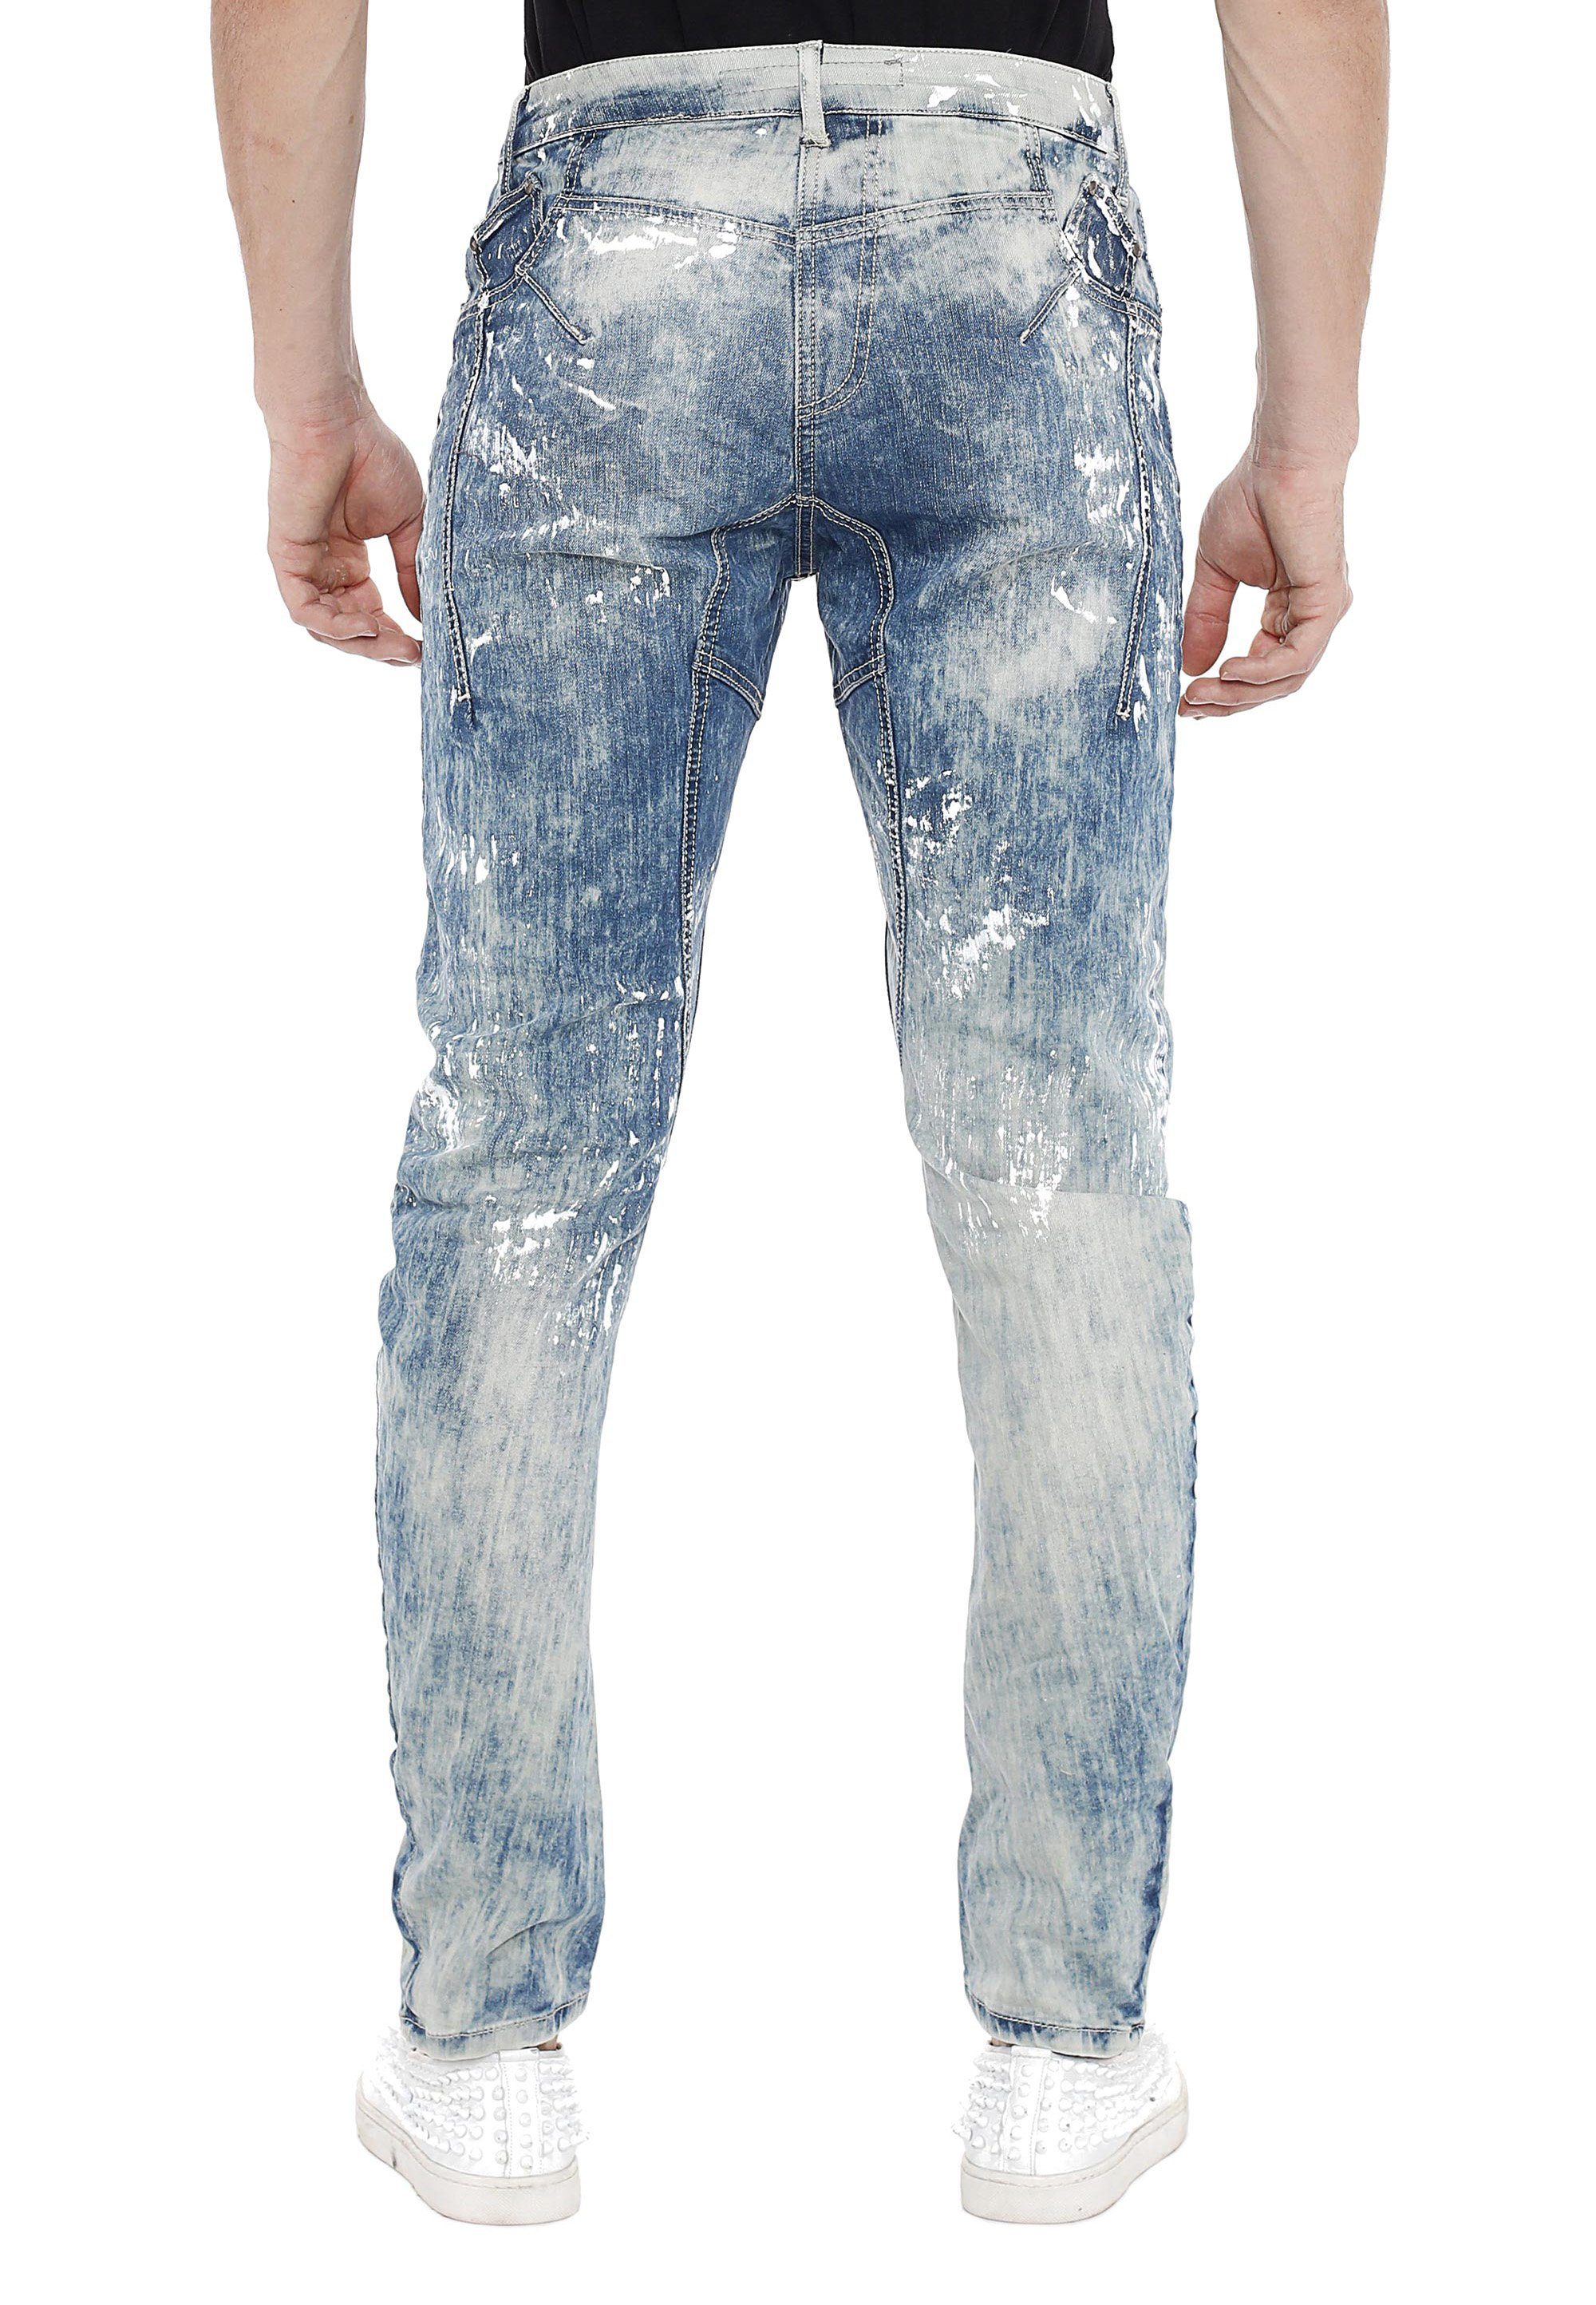 Cipo & Baxx Bequeme Jeans coolen mit Farbspots